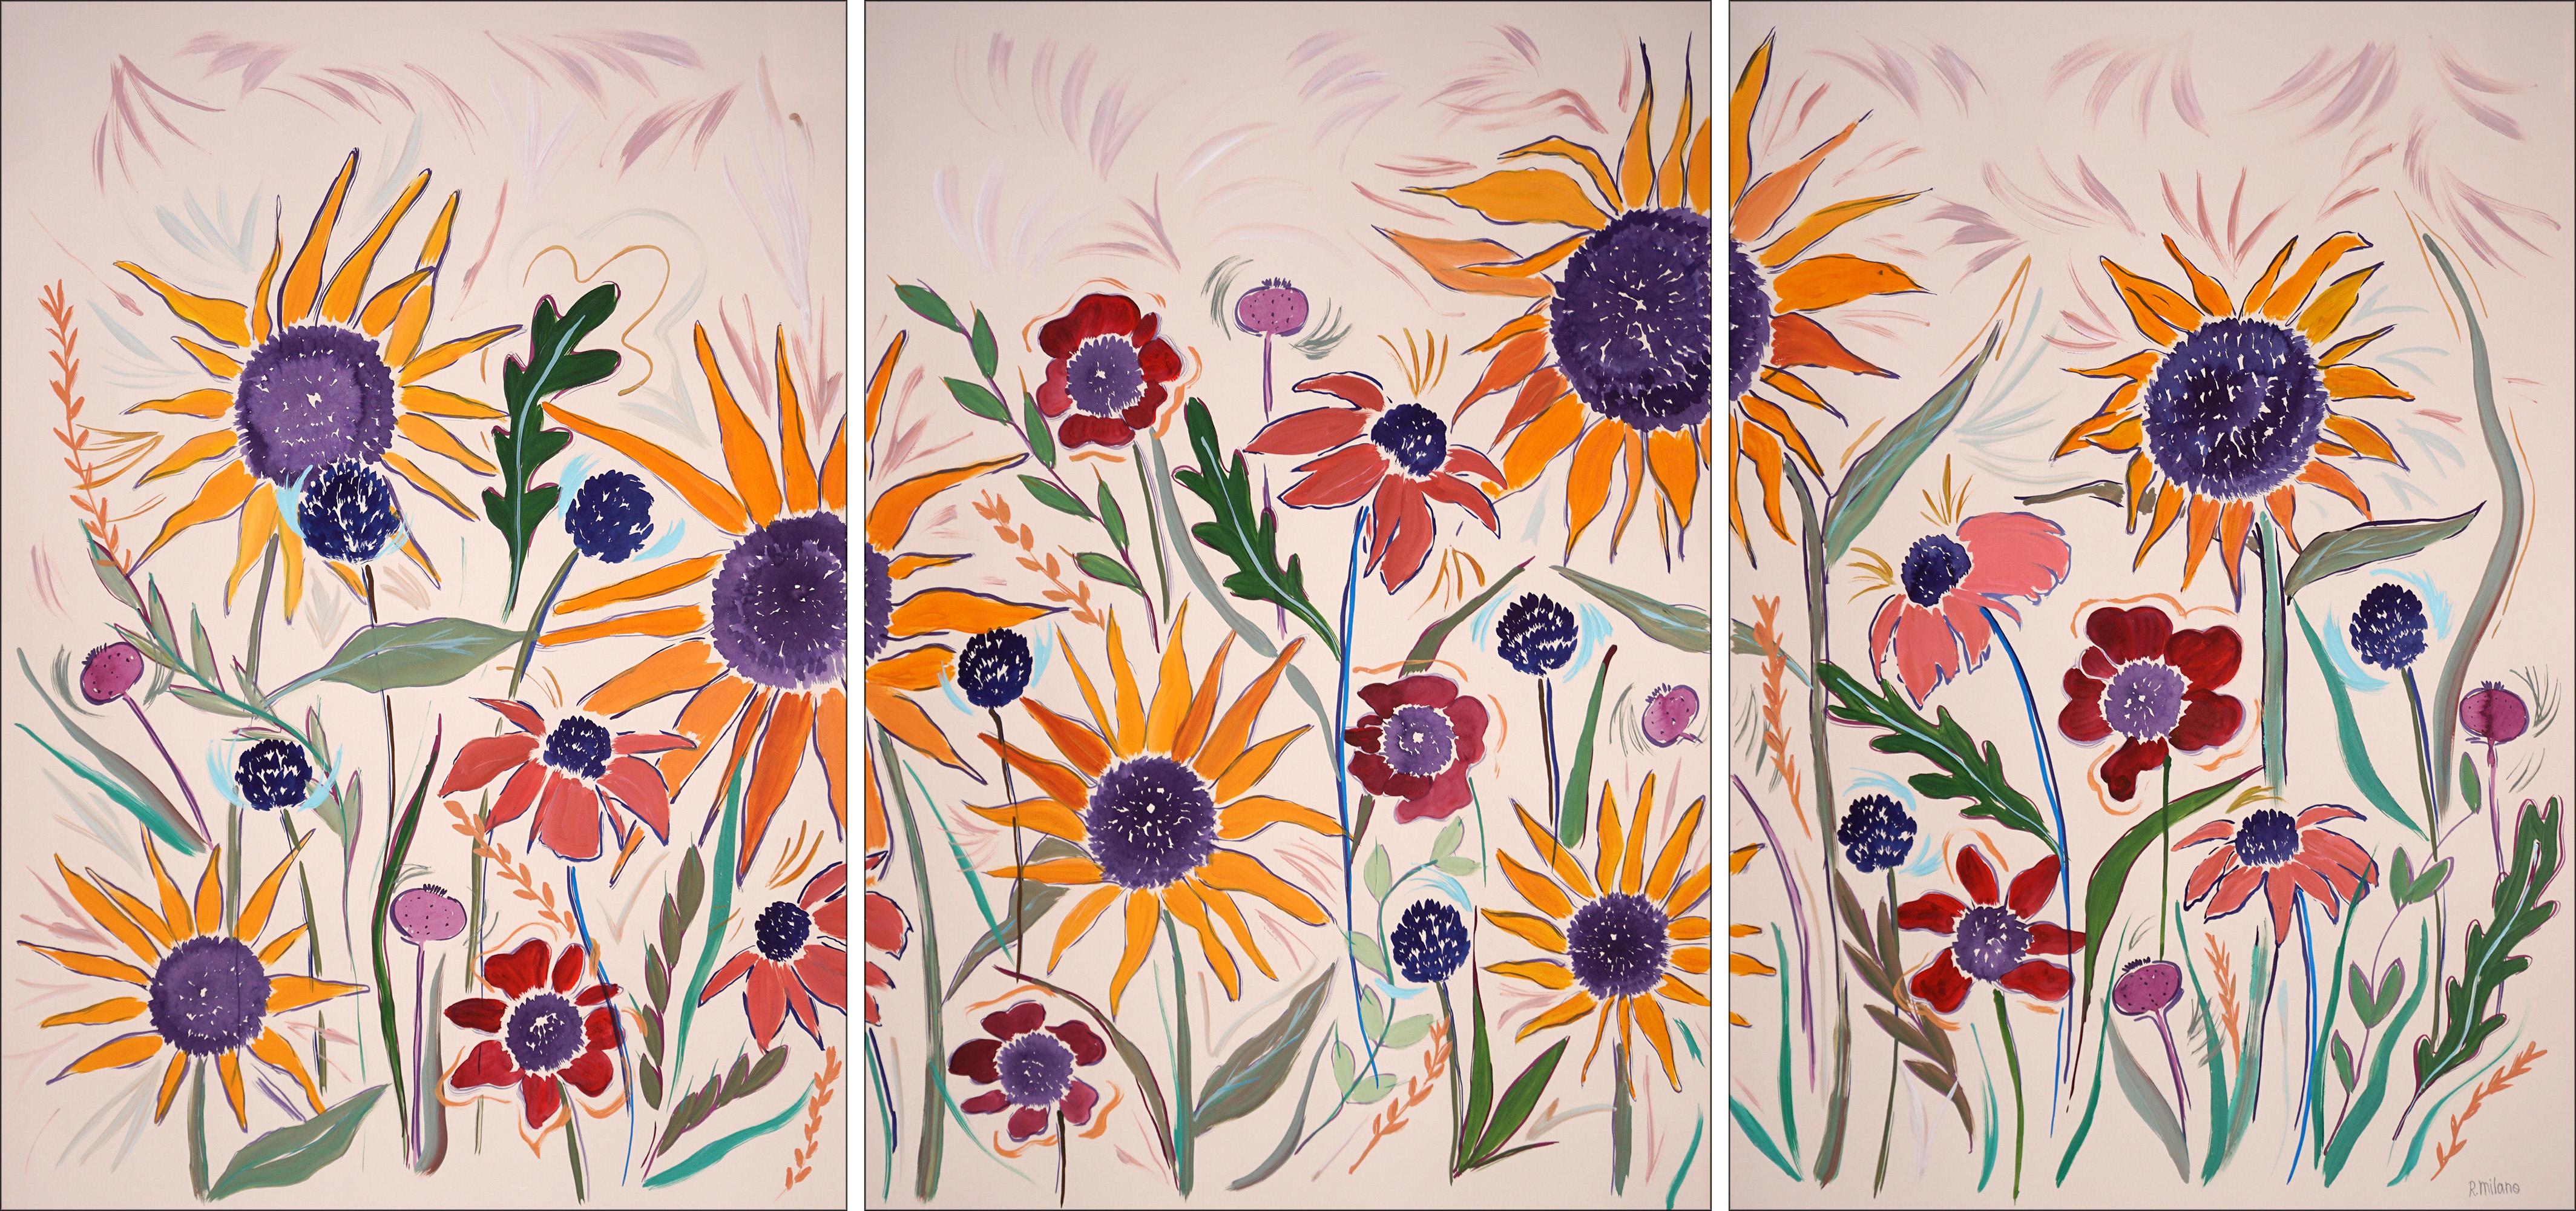 Sunflower Panorama Triptych, Large Countryside Flowers, Yellow Wild Margaritas